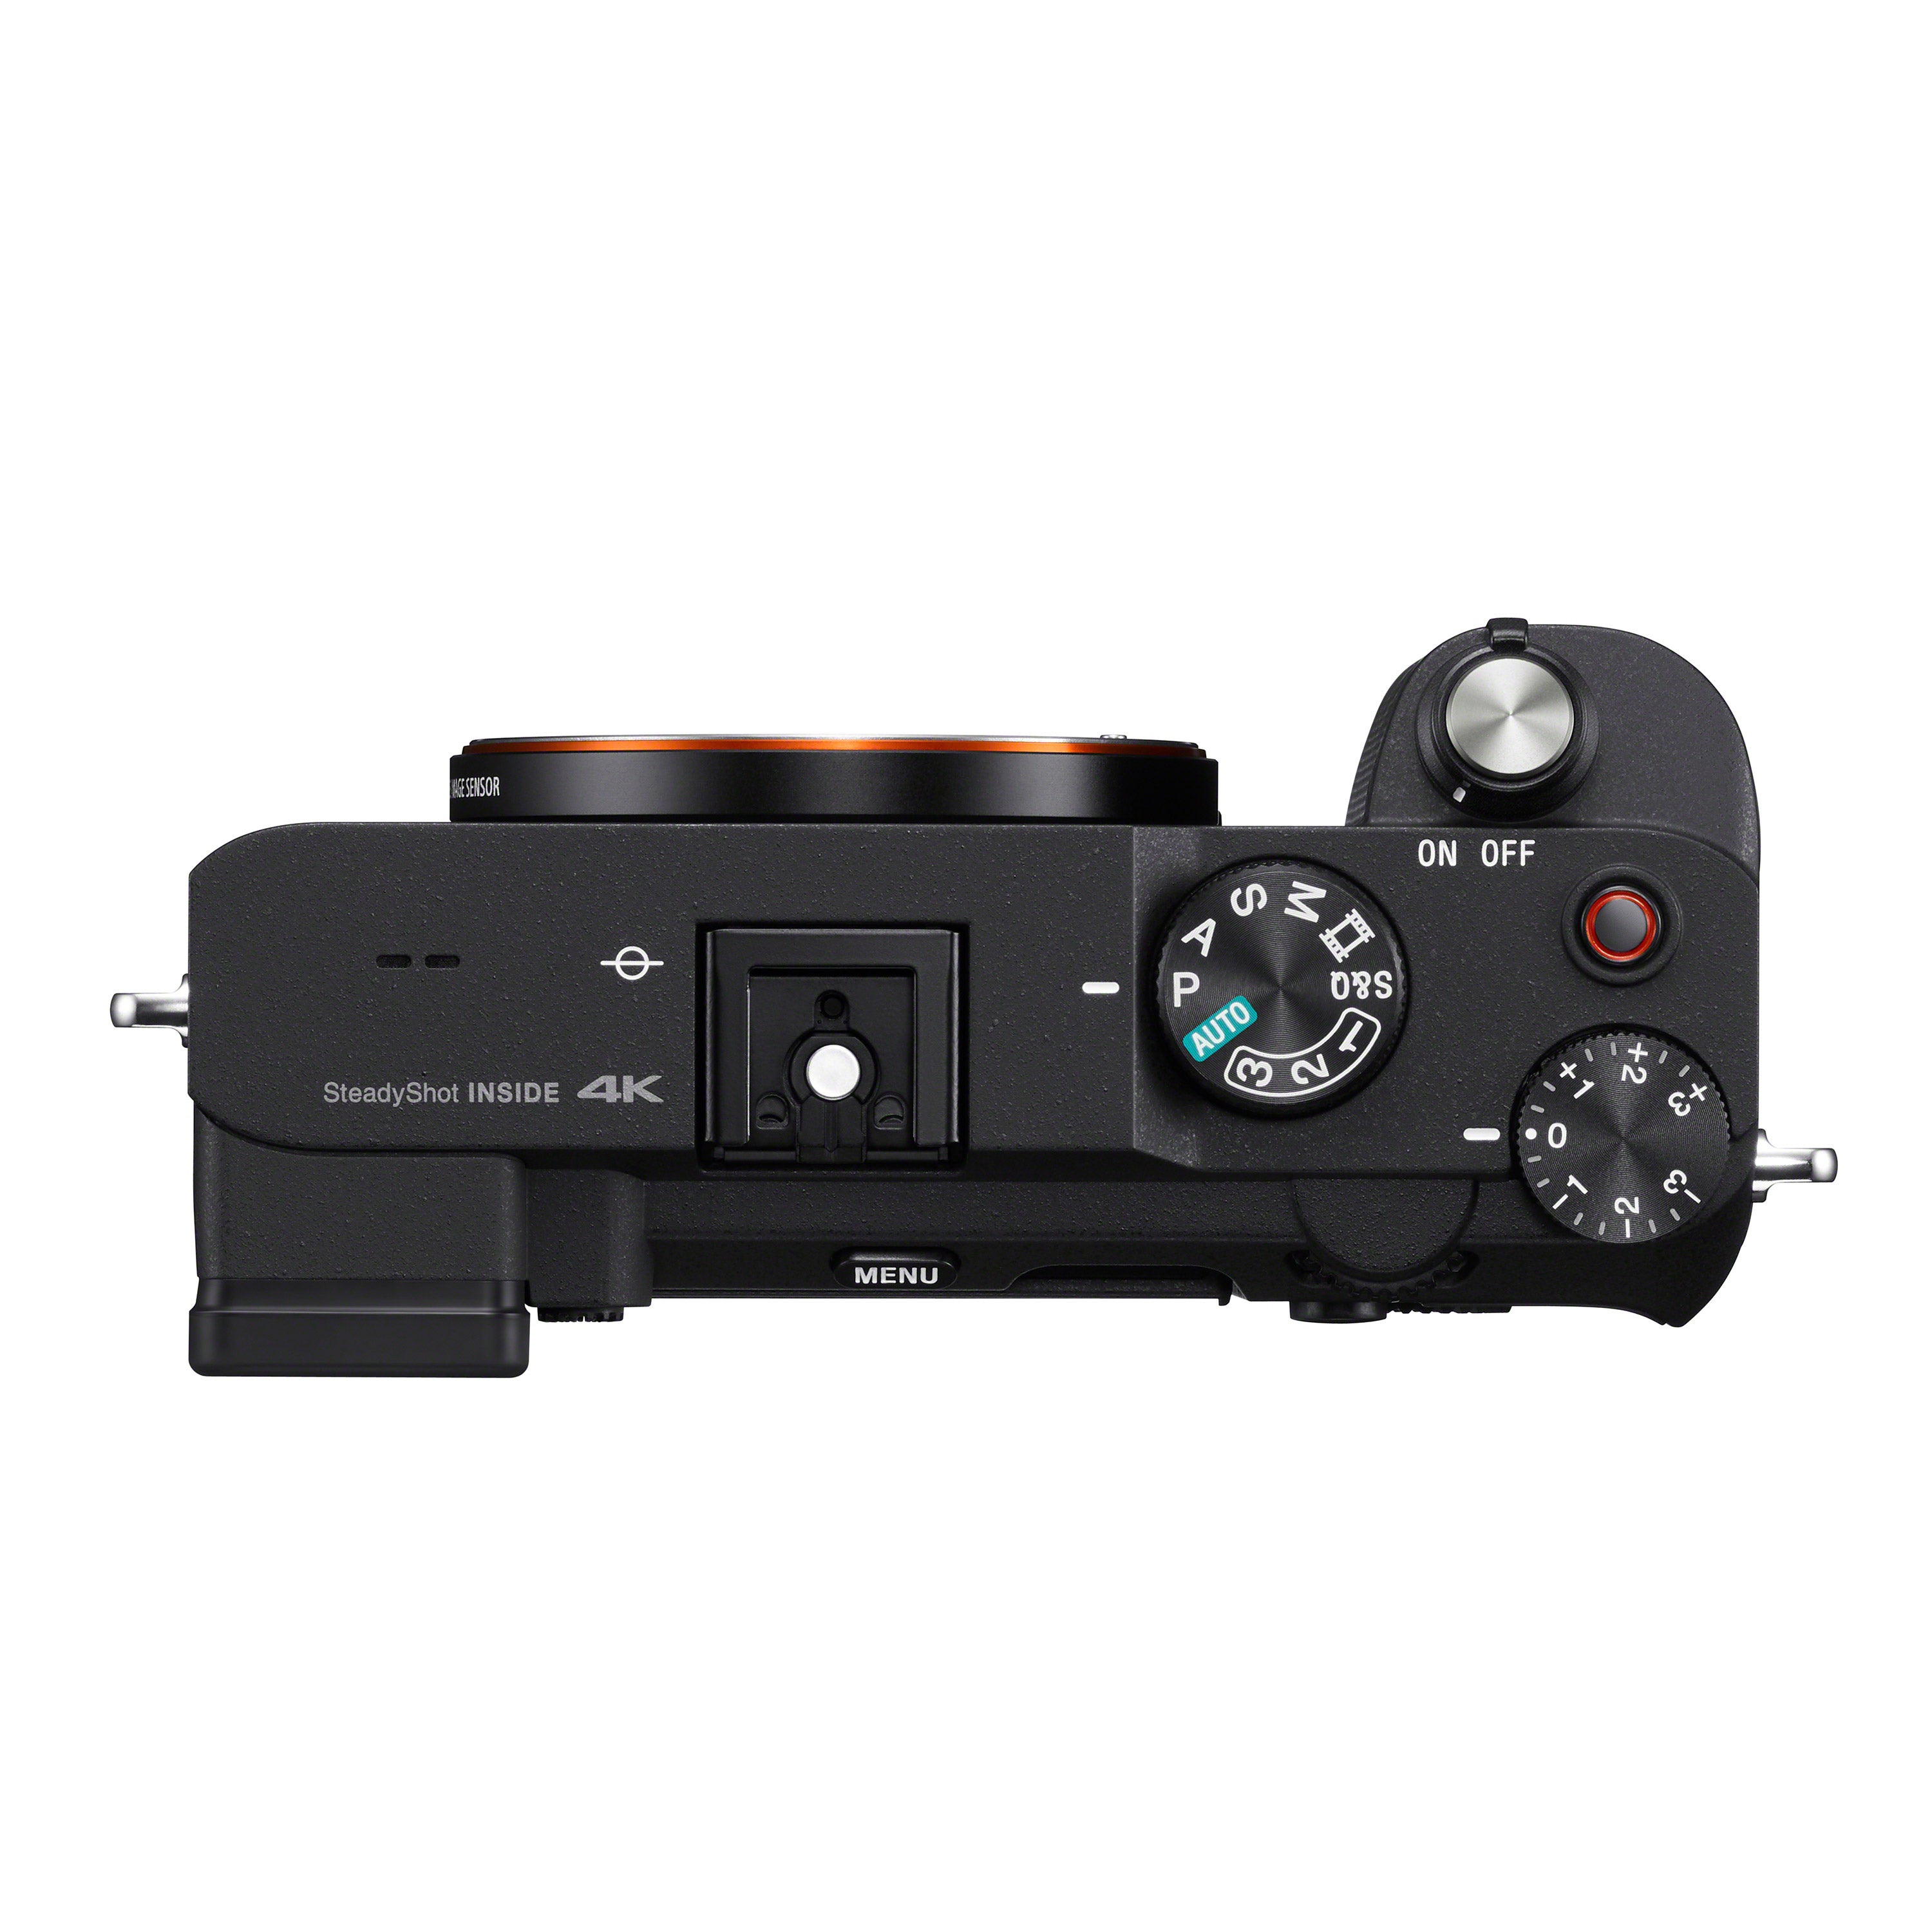 a7C Compact full-frame camera (Black)